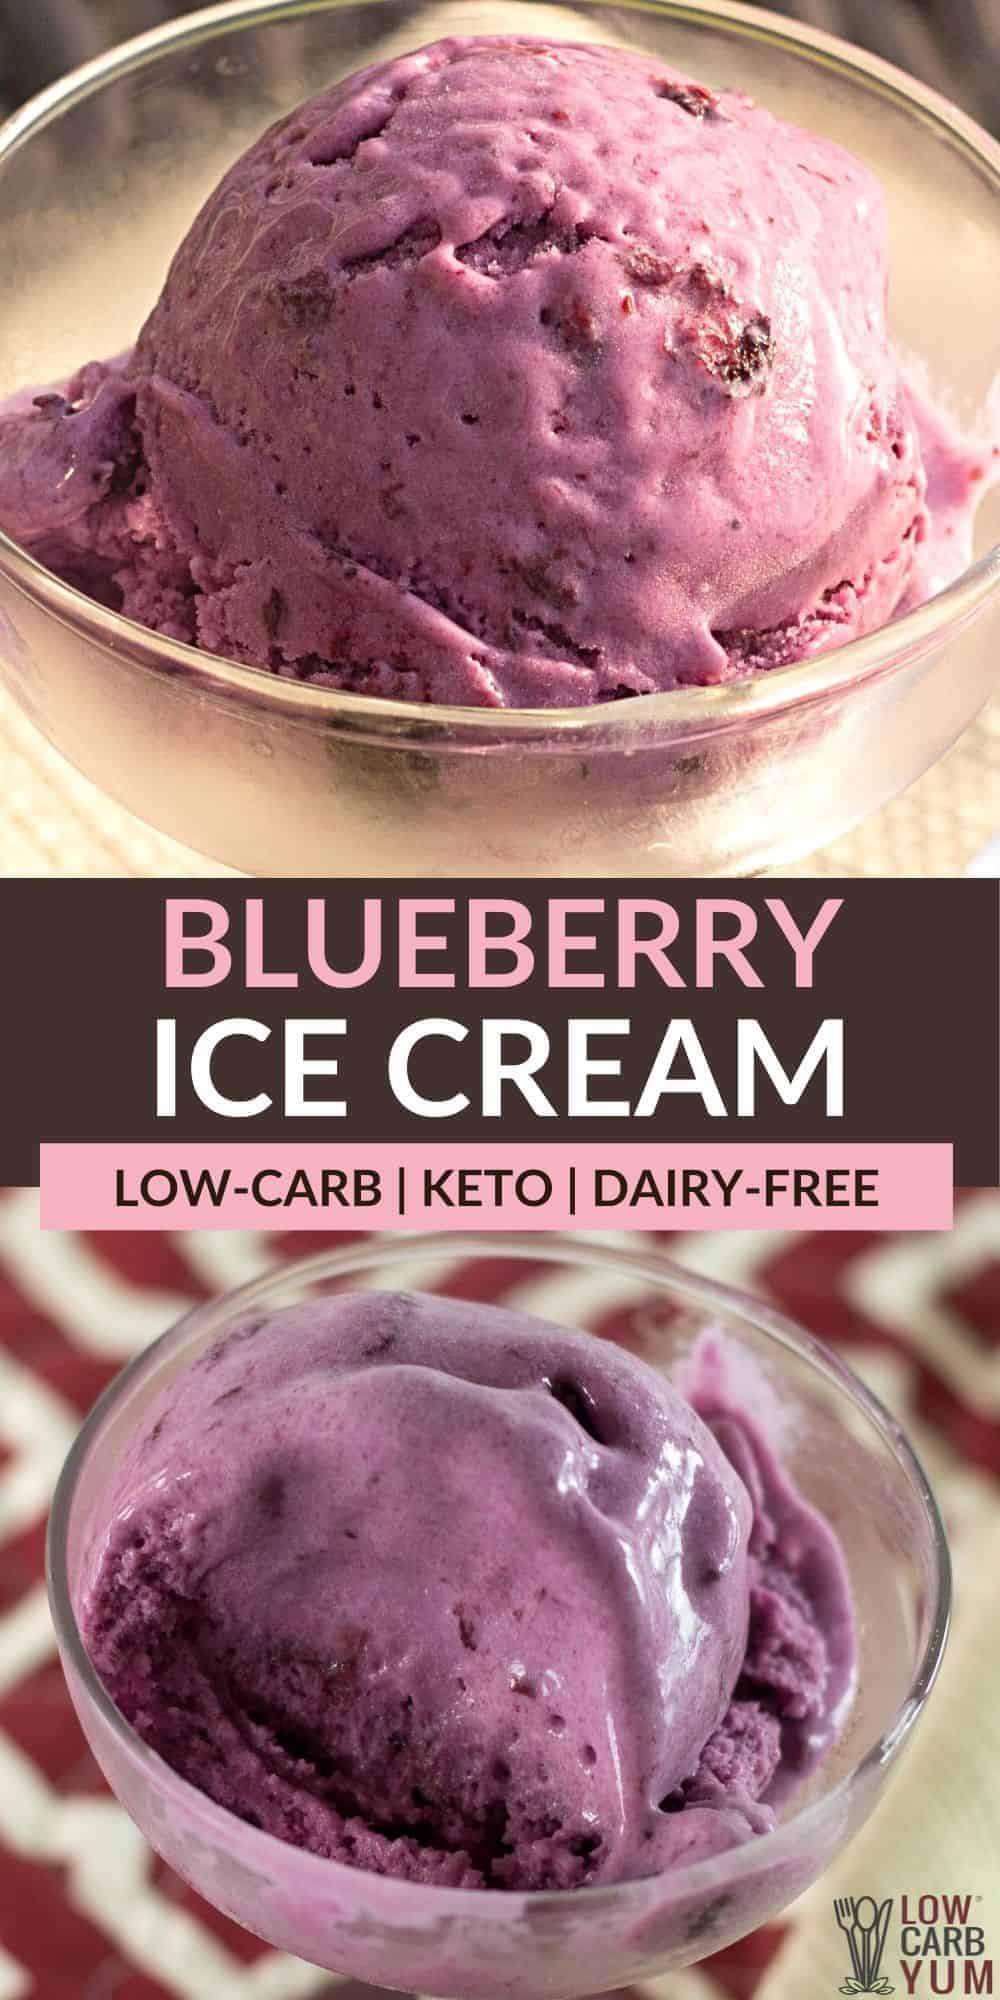 keto blueberry ice cream pinterest image.